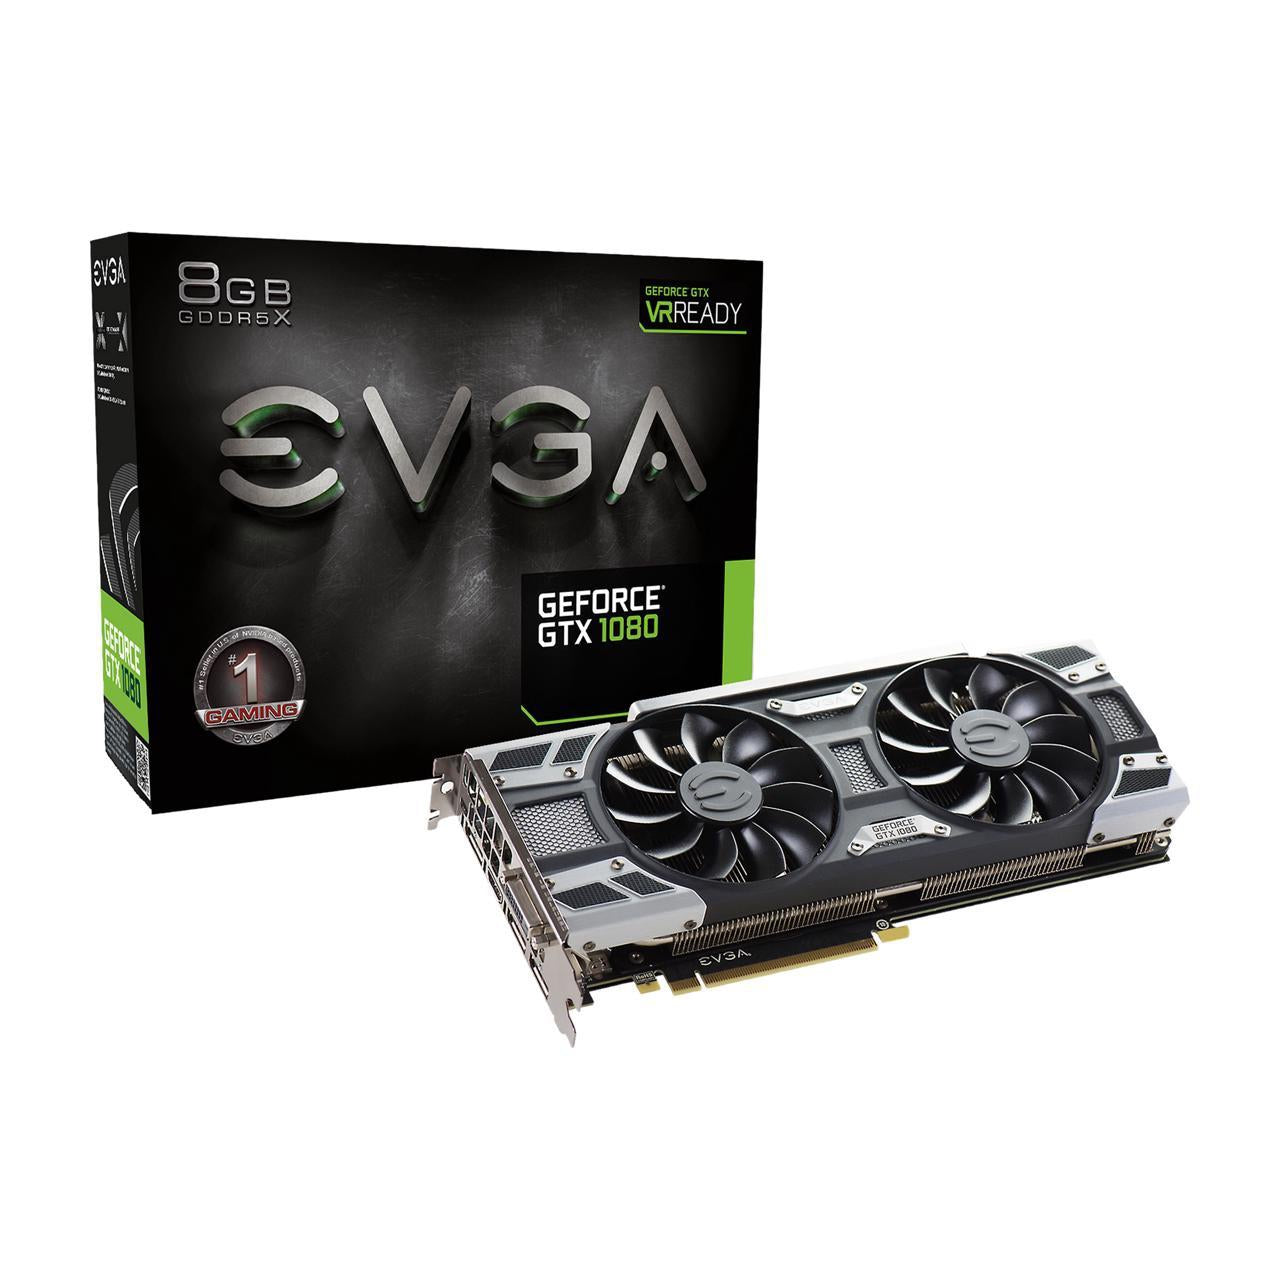 EVGA Geforce GTX 1080 - Refurbished Excellent | Stock Must Go